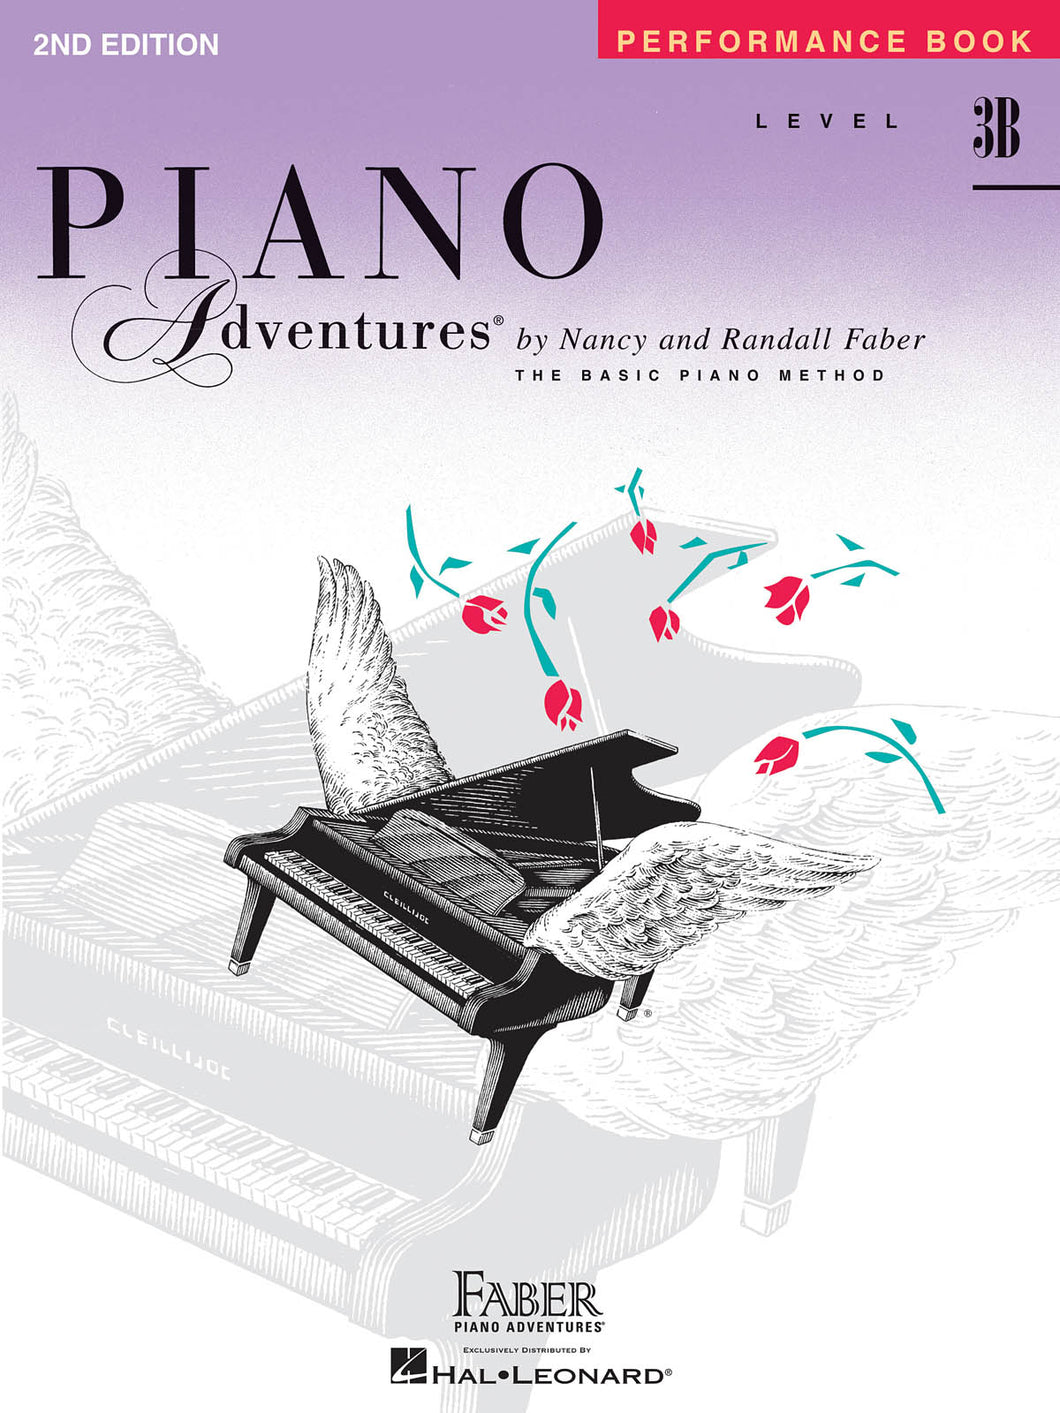 Faber Piano Adventures Level 3B Performance